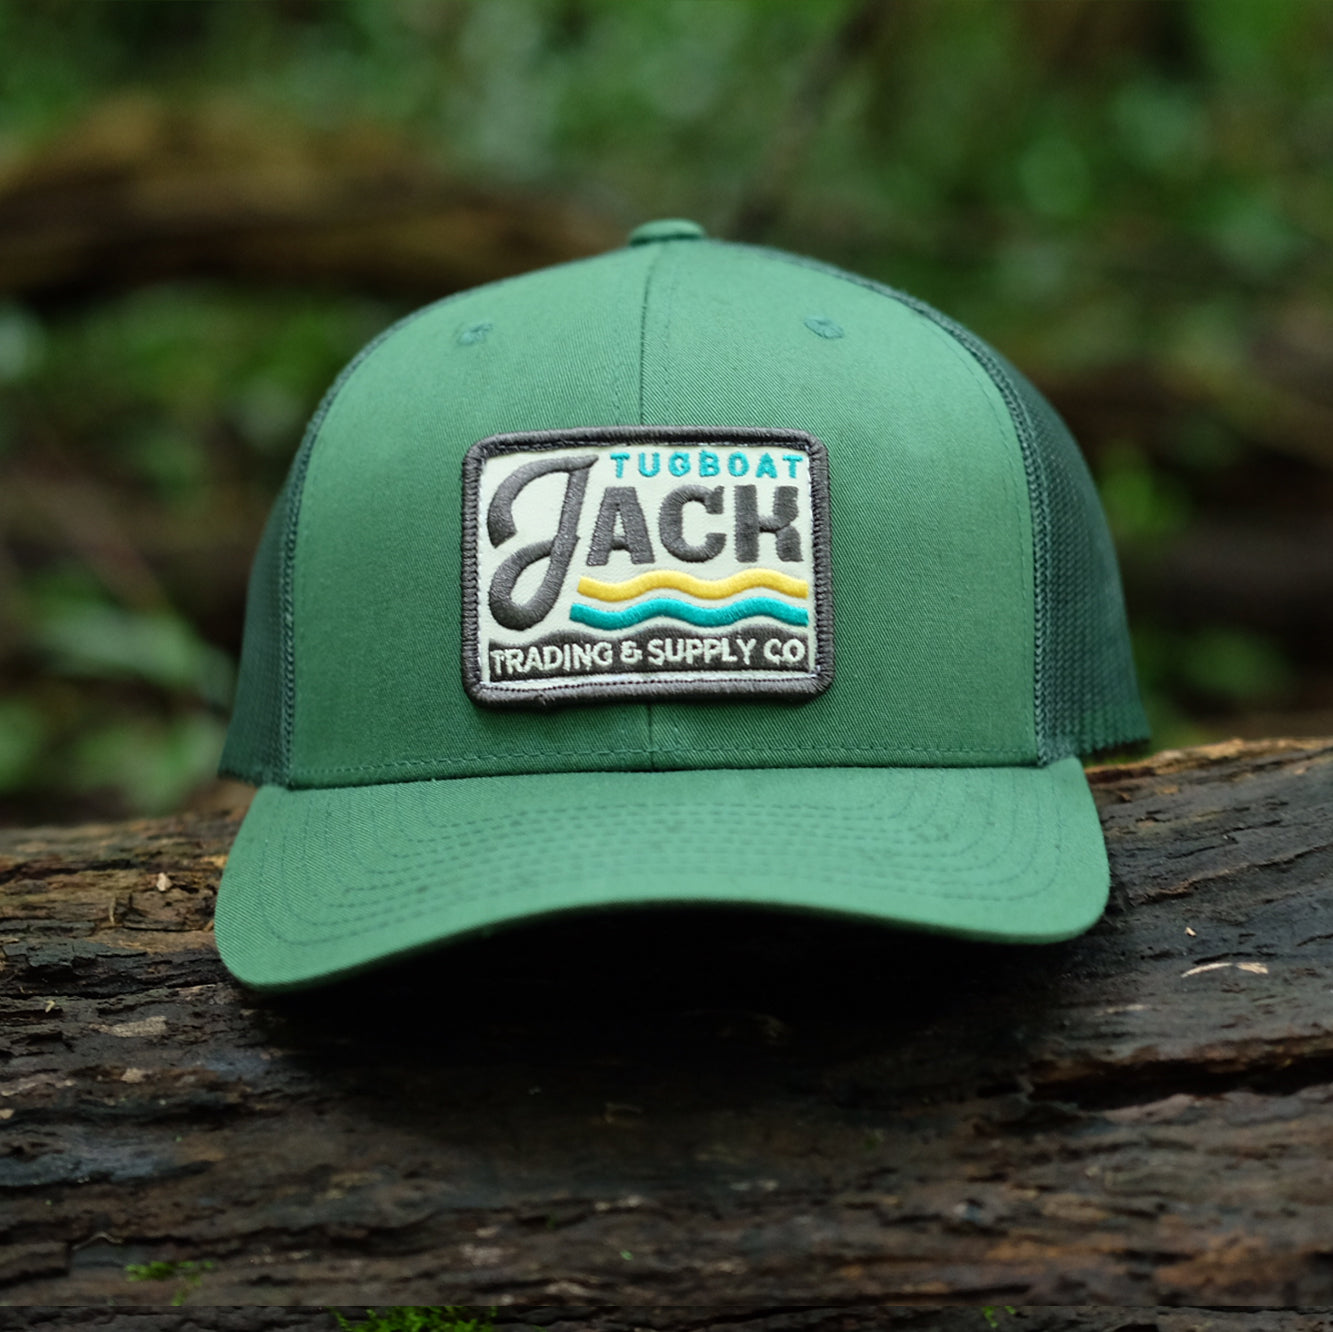 Tugboat Jack Green Shipping Hat